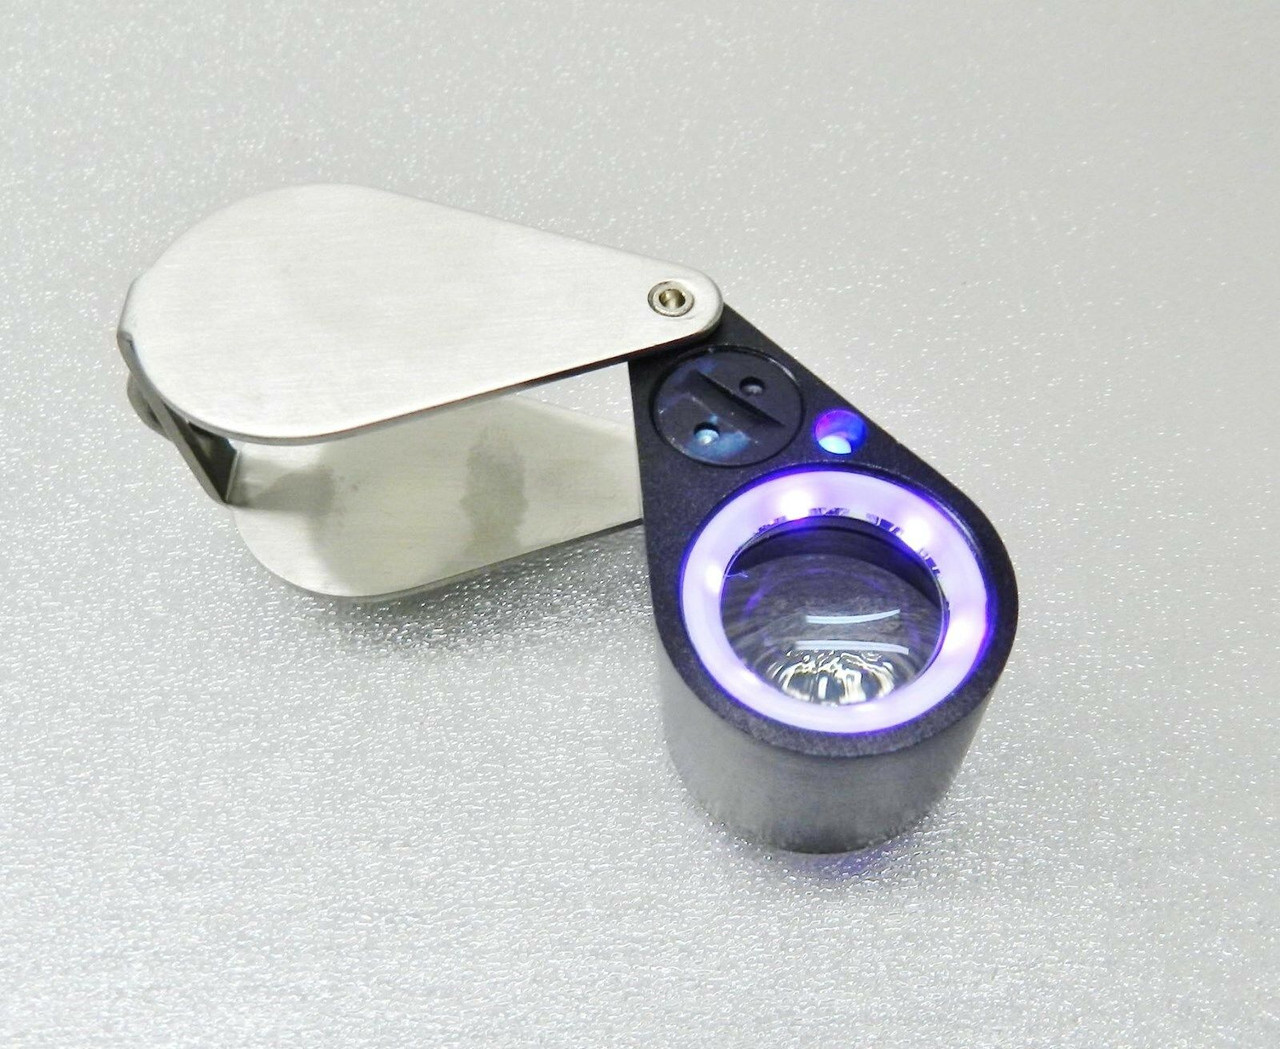 Jewelers Loupe LED + UV Lights Triplet iGaging 21mm Lens 10x Magnification Jewel